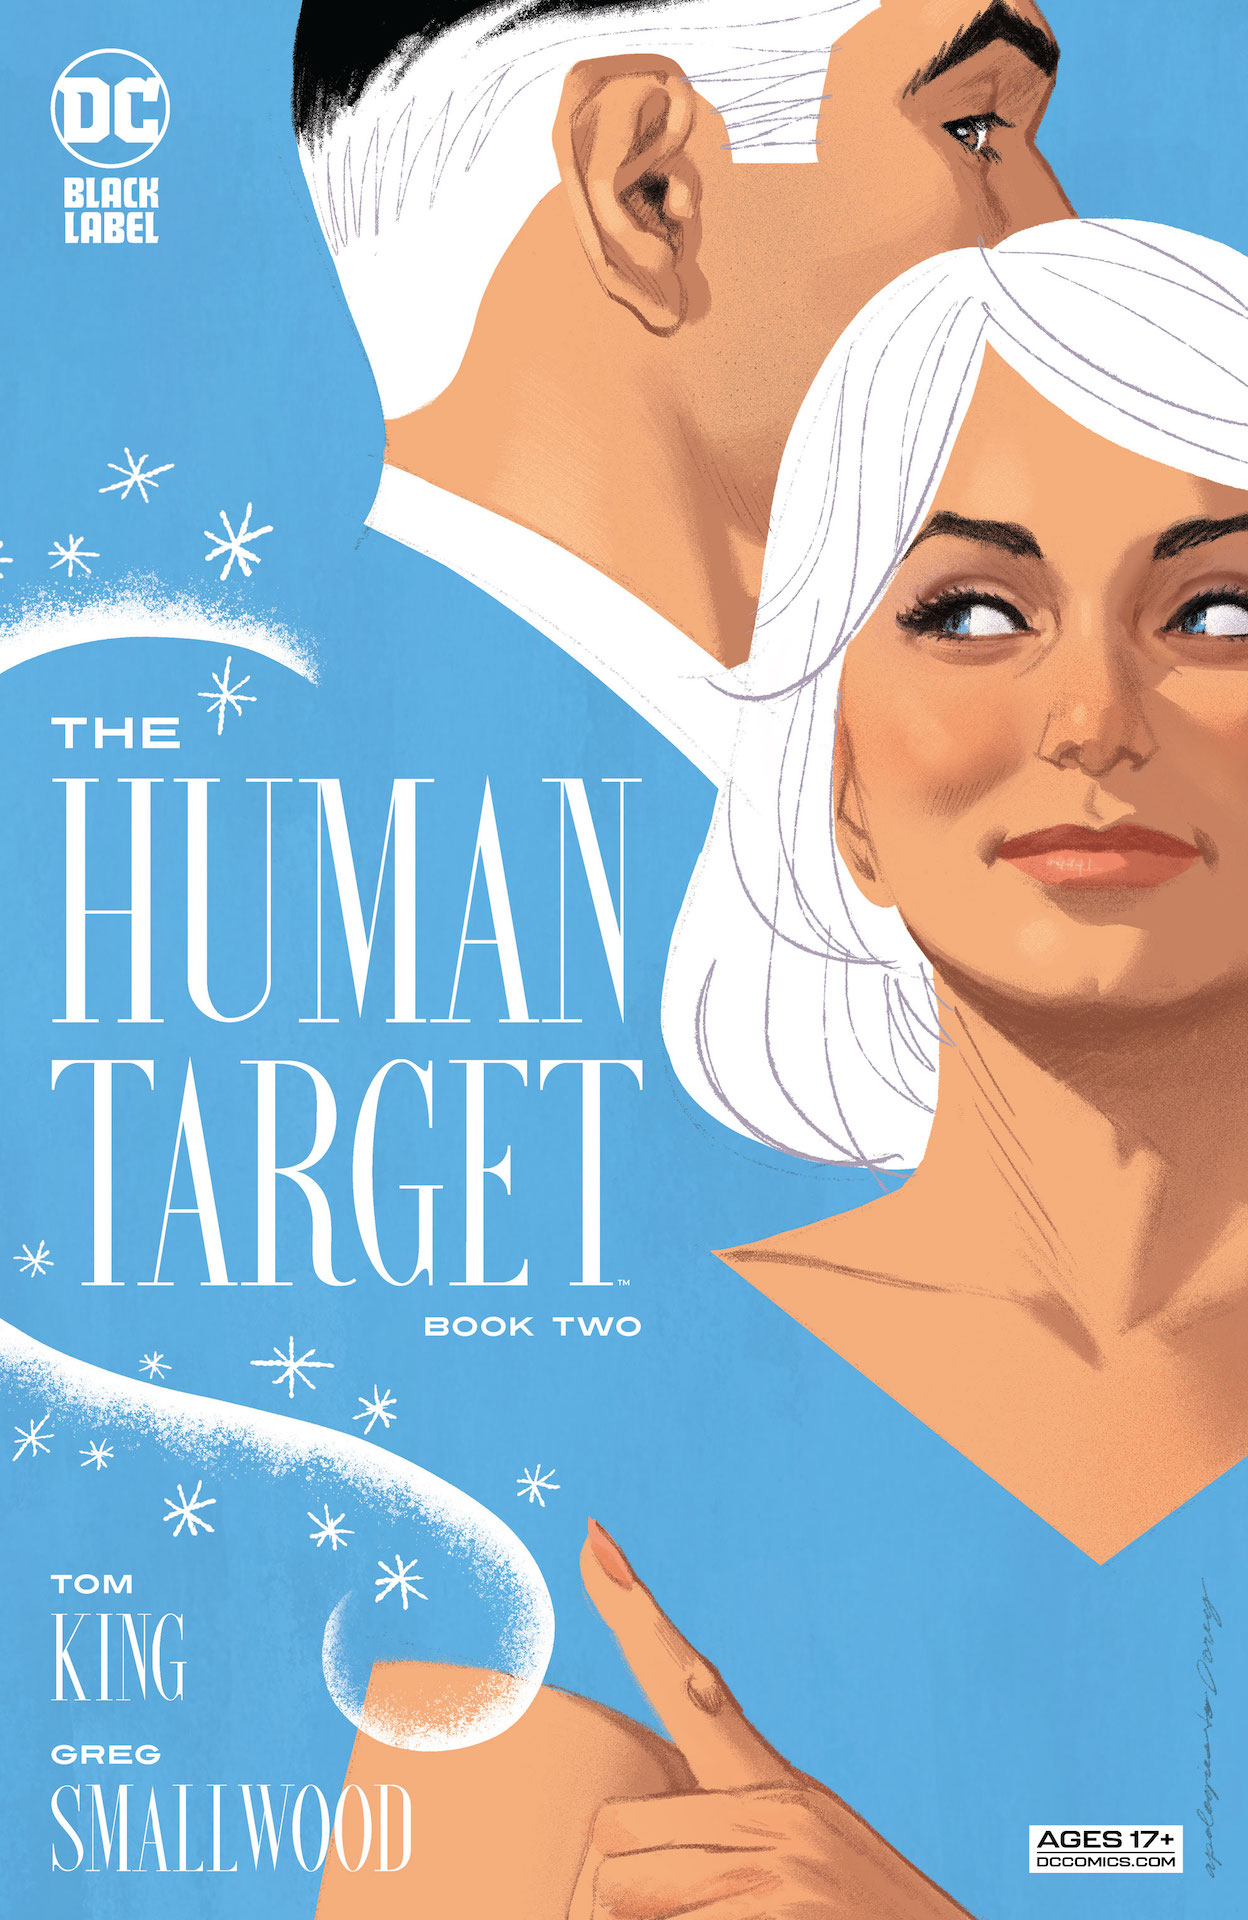 DC Preview: Human Target #2